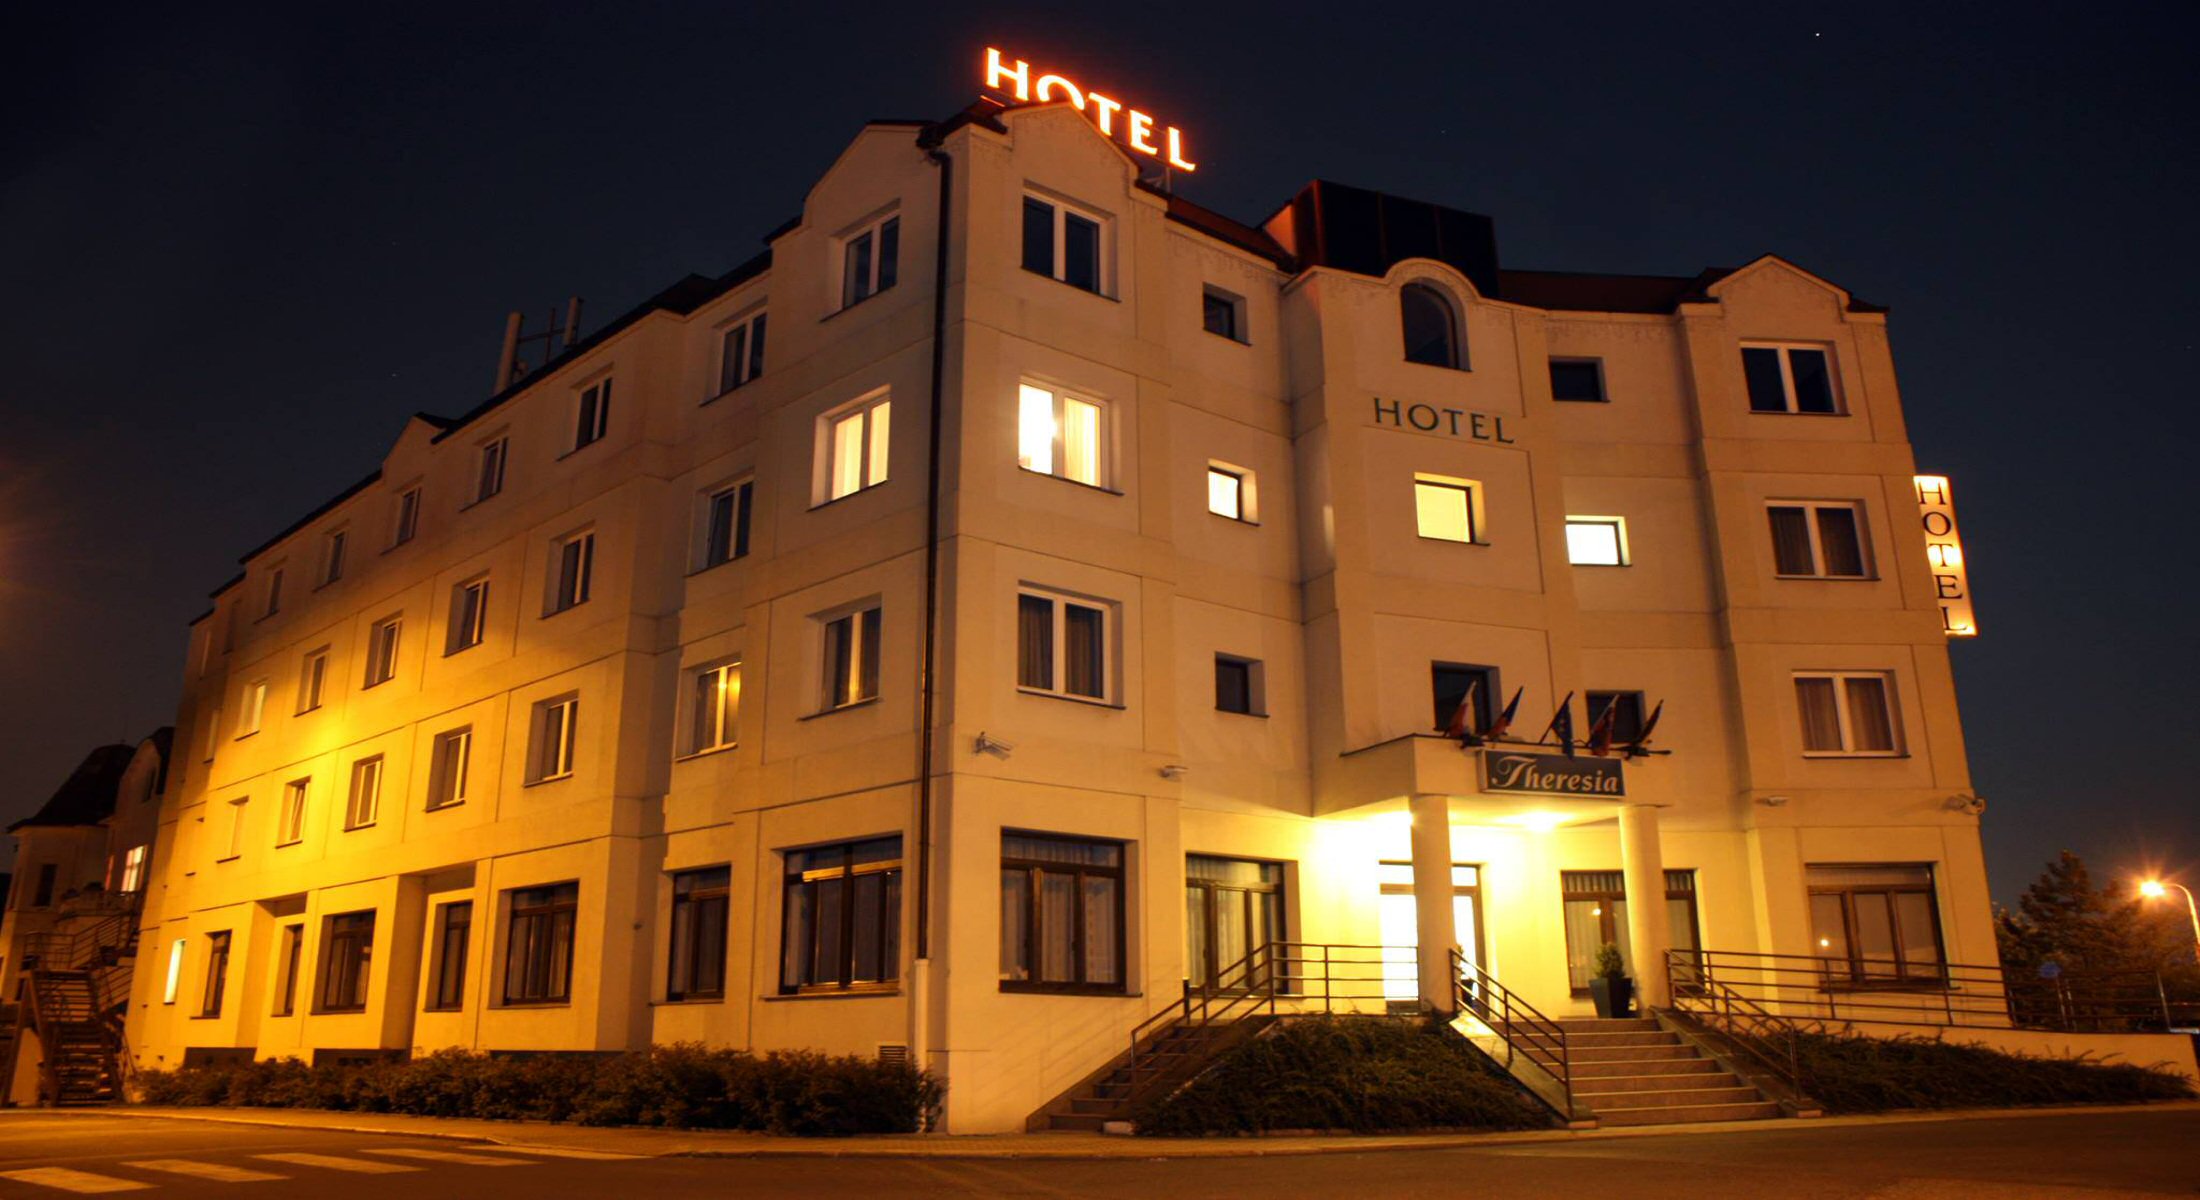 Hotel Theresia photo 1 - full size